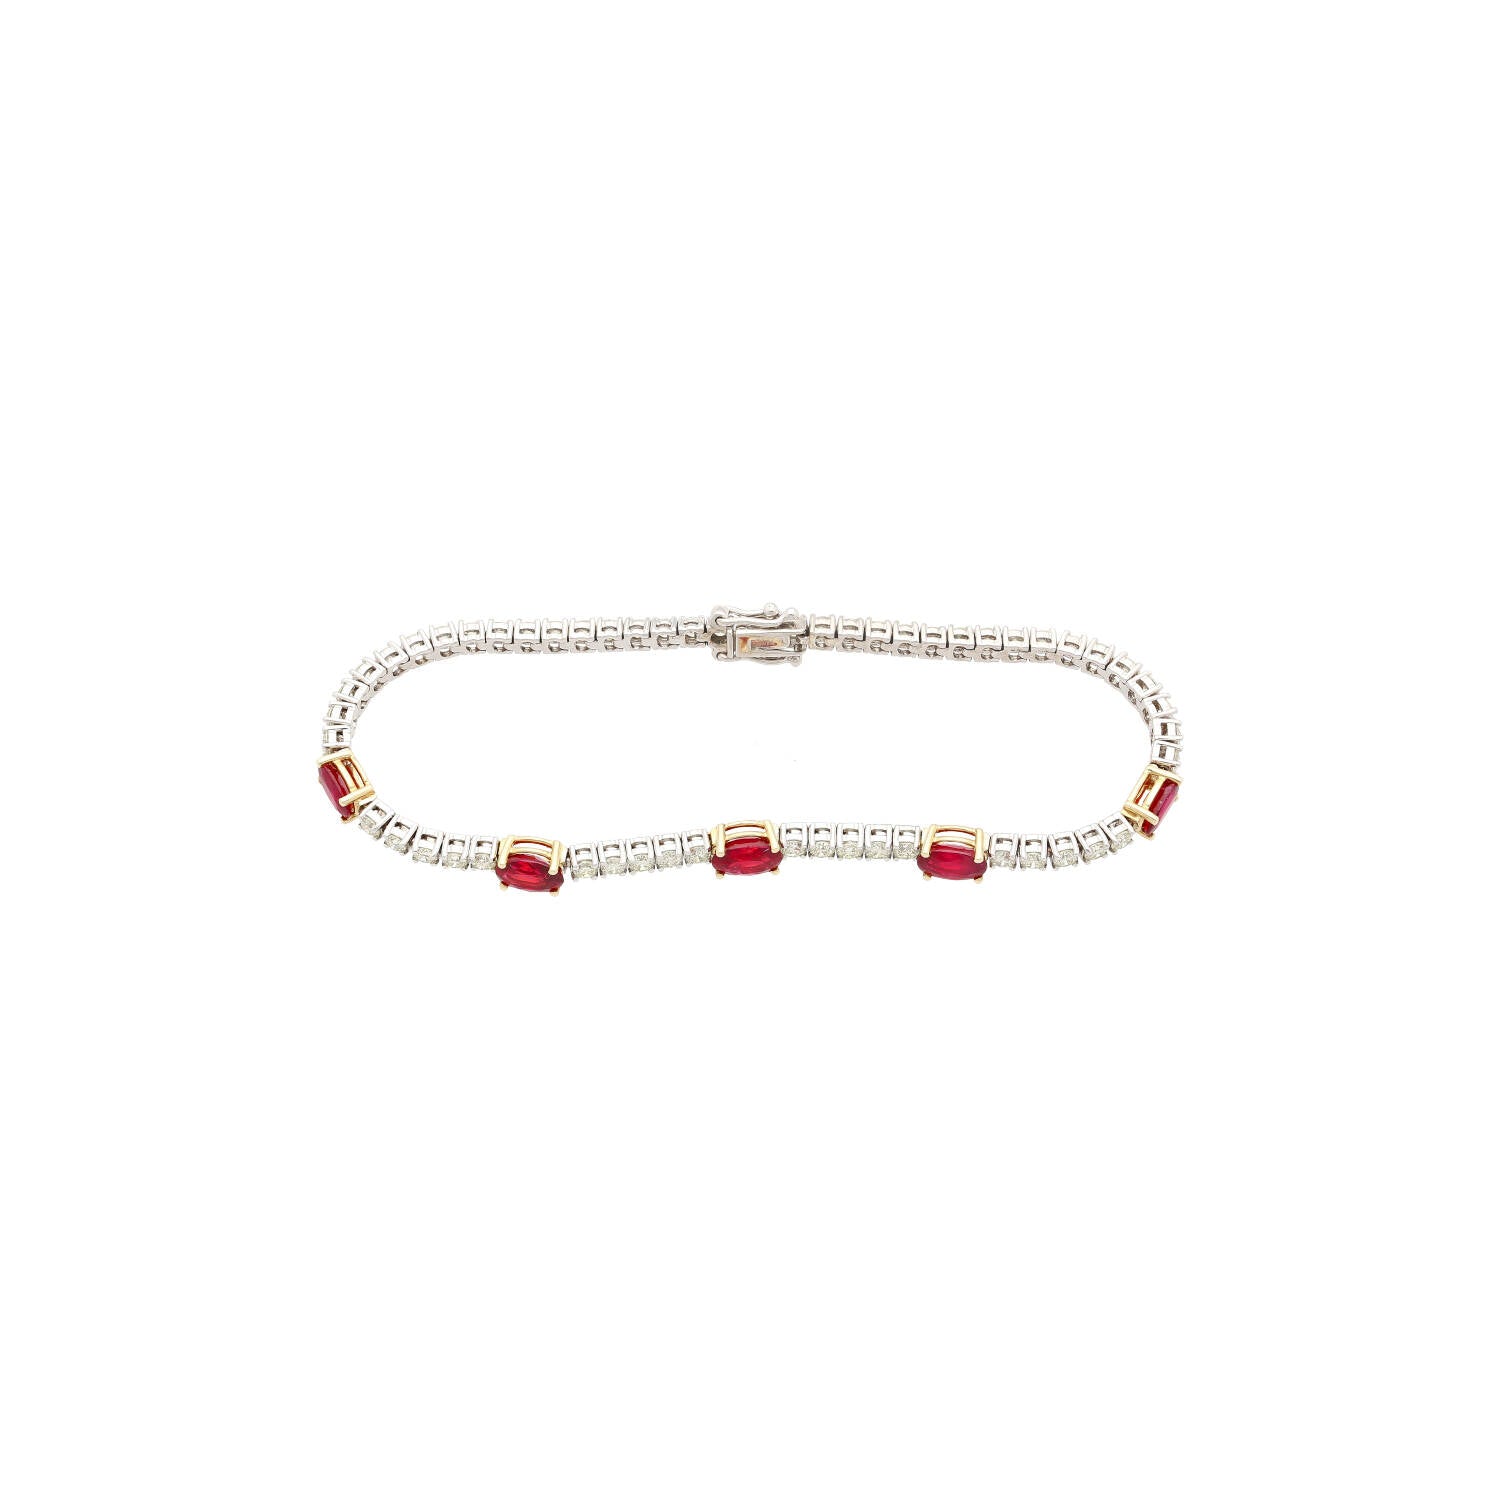 5.13 carat Ruby and Diamond Tennis Bracelet in 18K White Gold